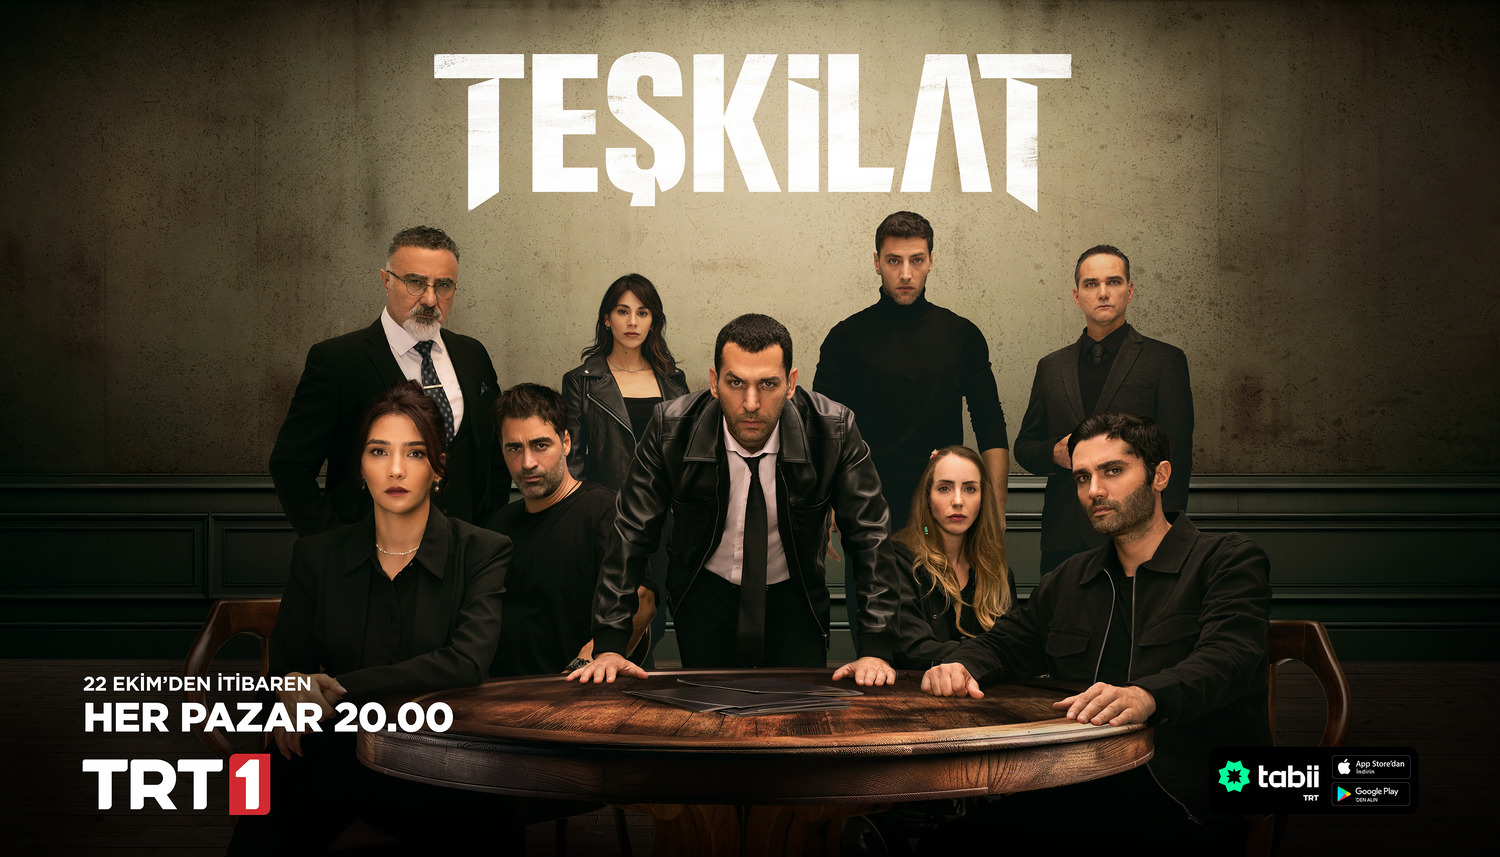 Extra Large TV Poster Image for Teskilat (#2 of 2)